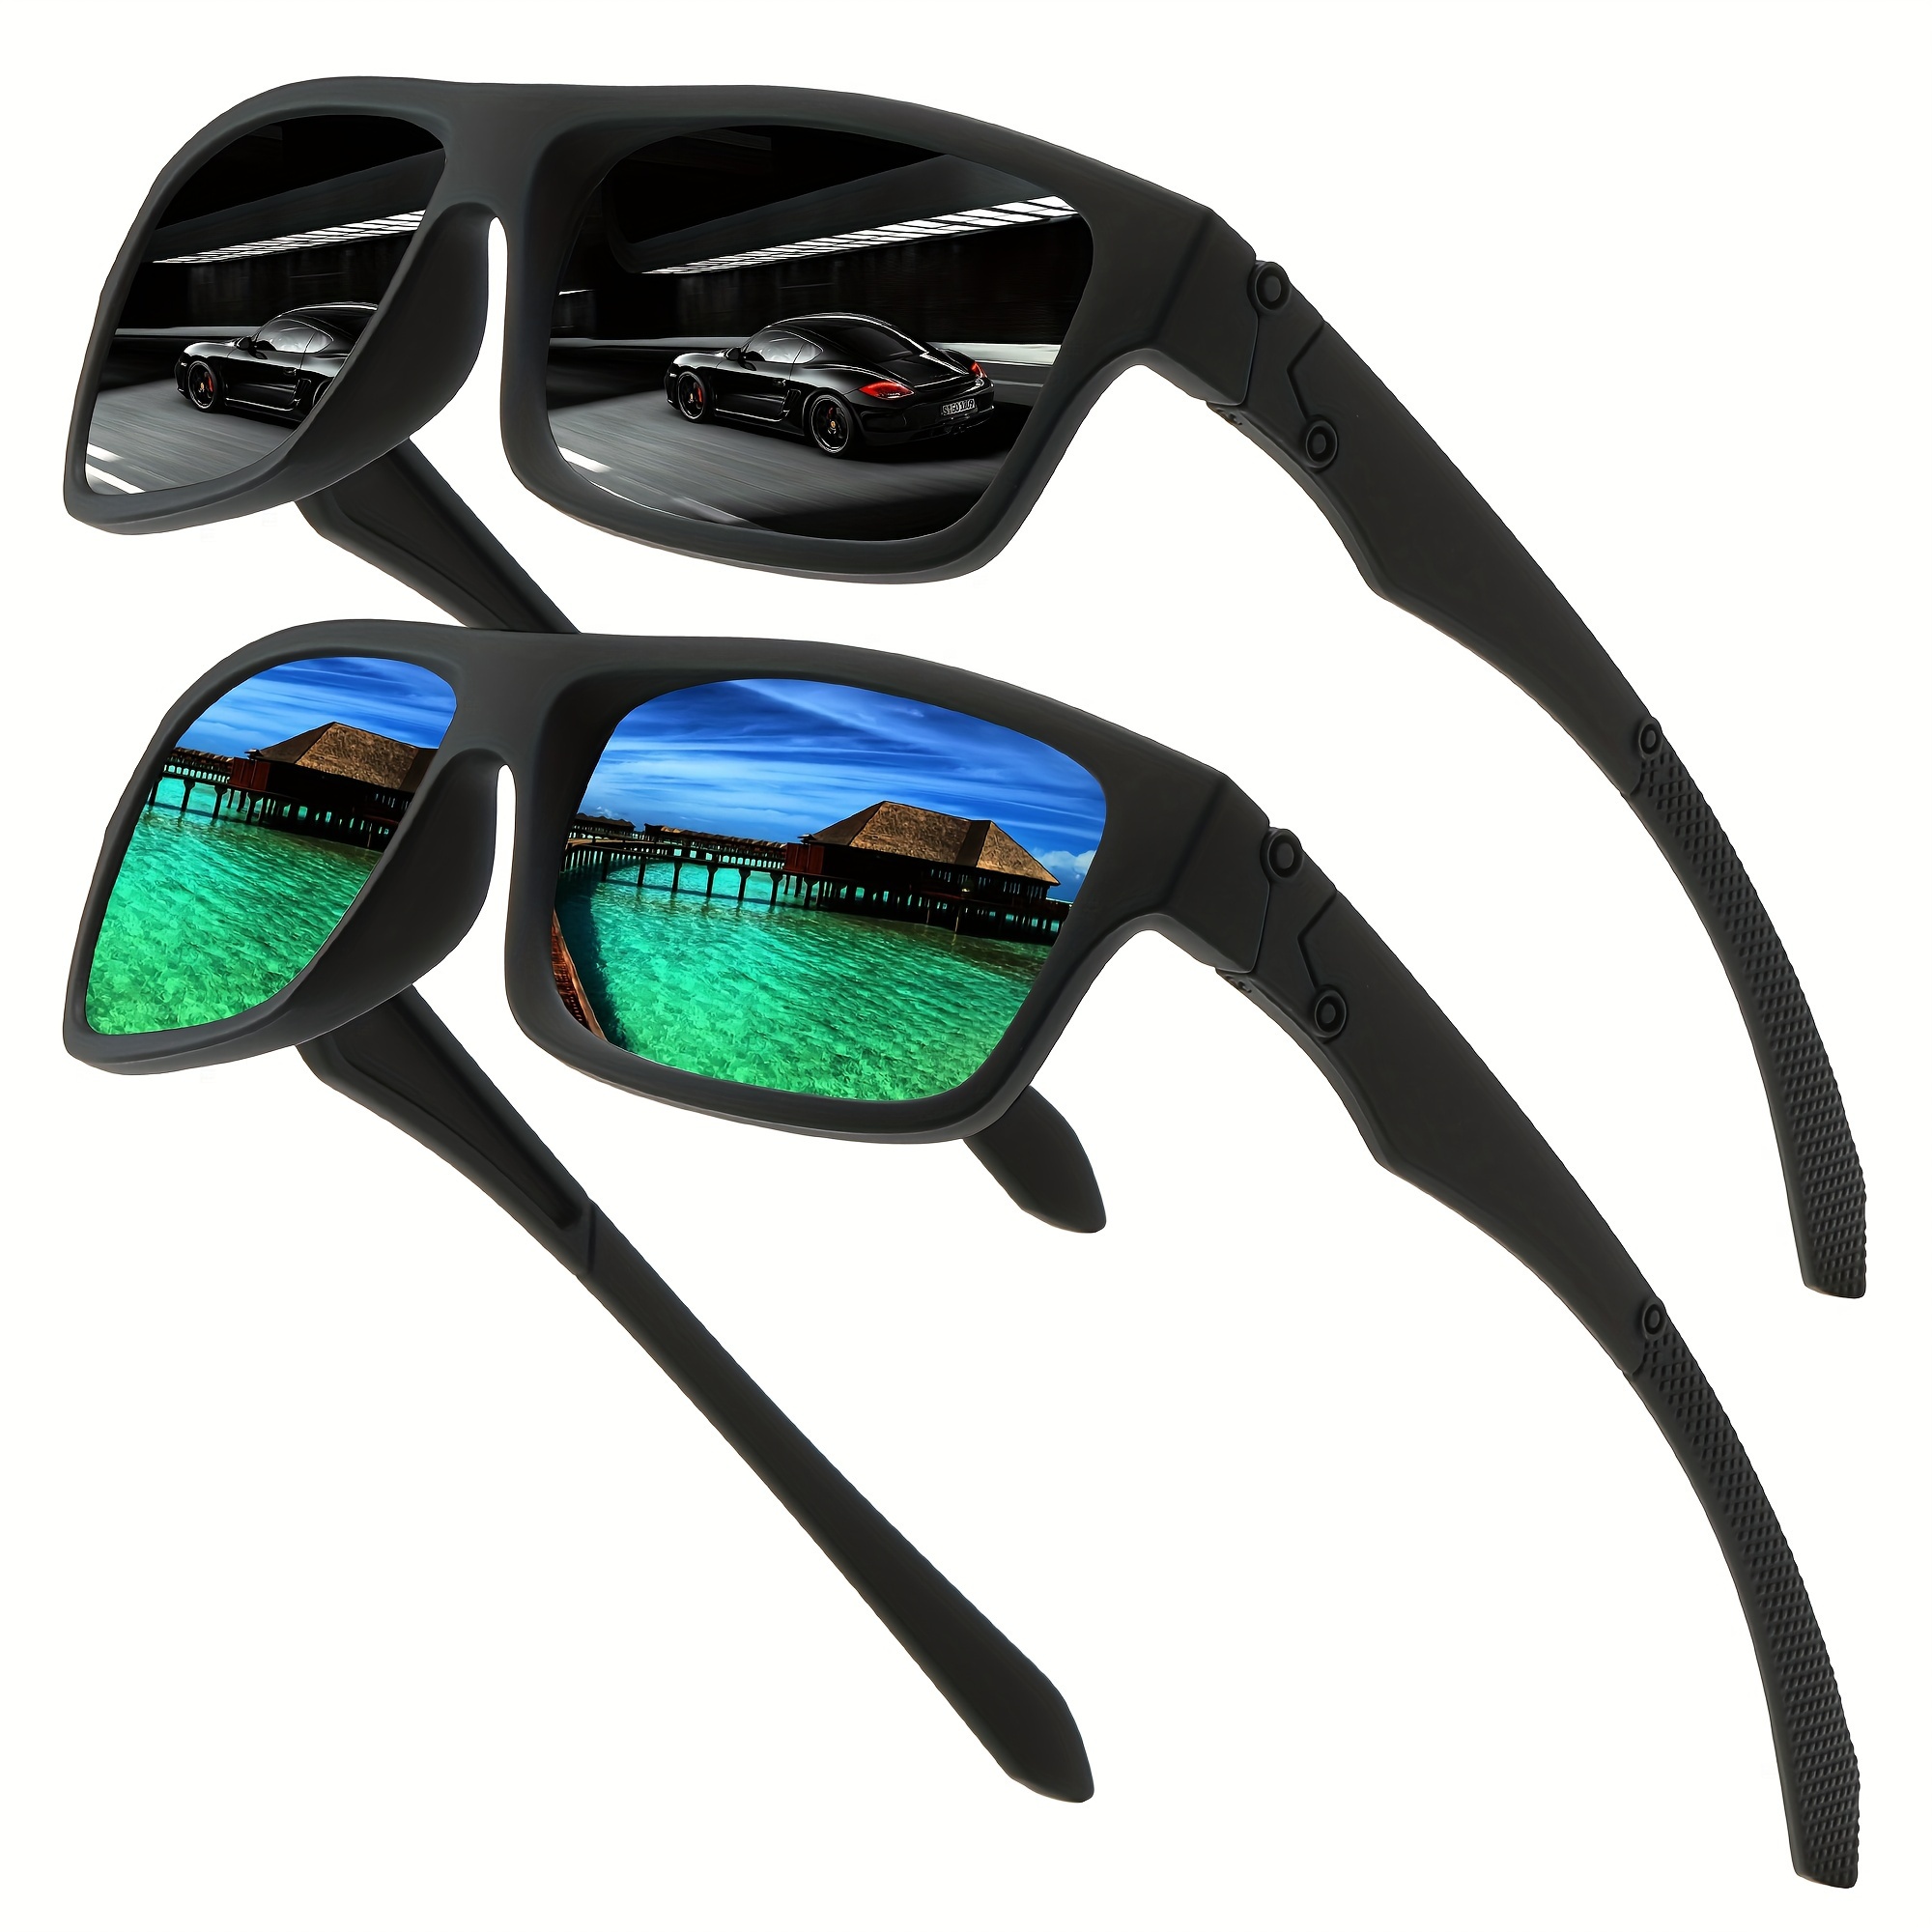 Men's Polarized Sunglasses Outdoor Sports Cycling Sunglasses Driver Driving Fishing Glasses UV400,Sun Glasses,Googles 4K Pit Vipers,Goggles